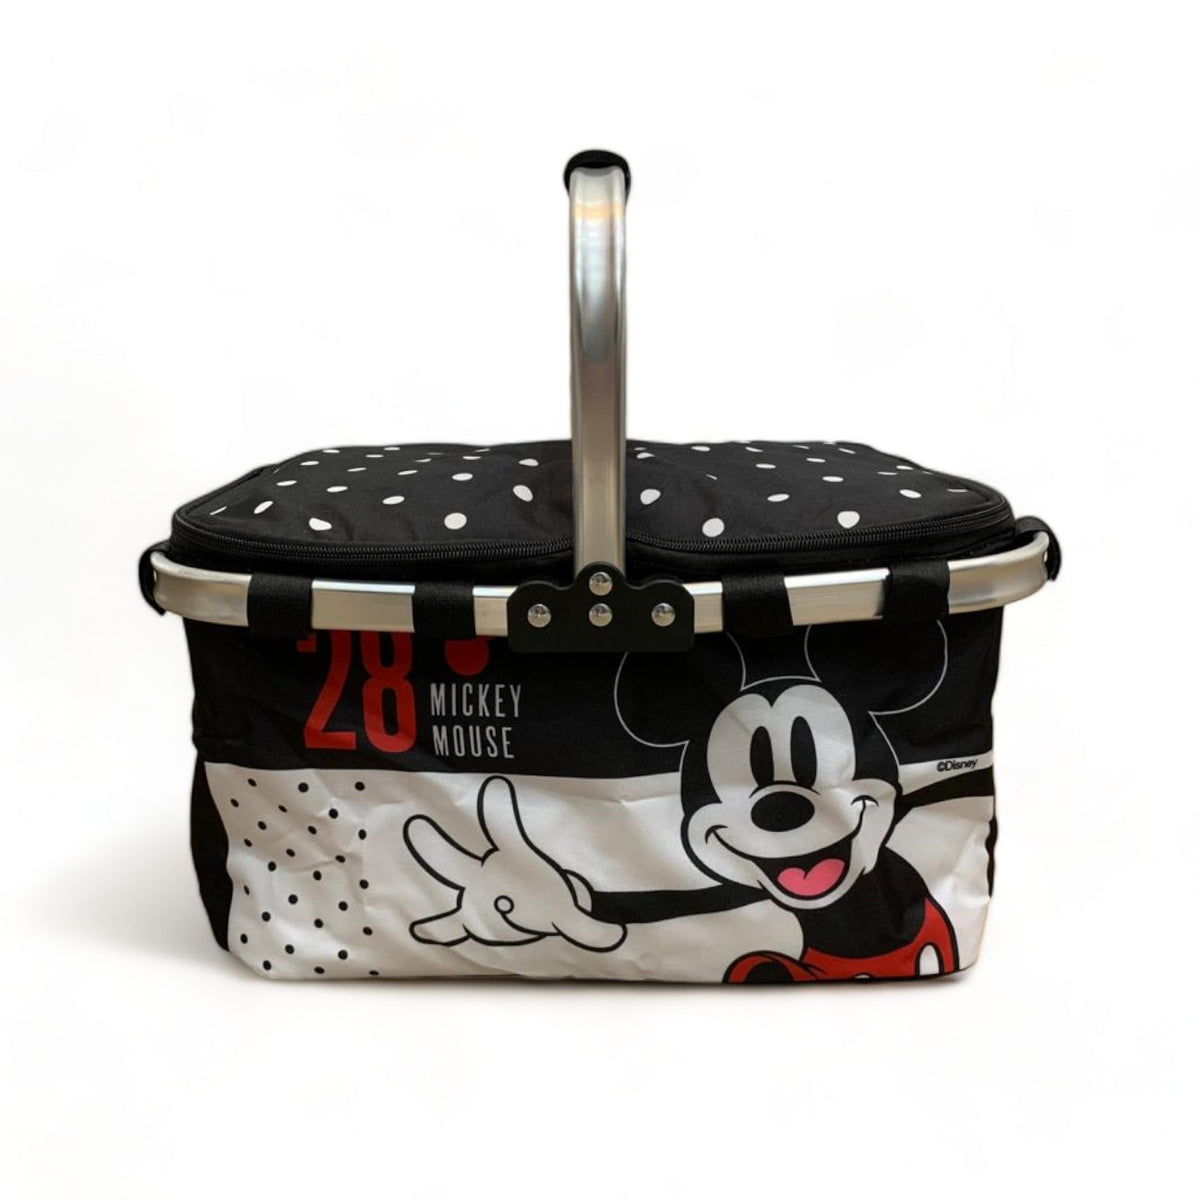 Canasta térmica plegable de Mickey Mouse 35x25cm